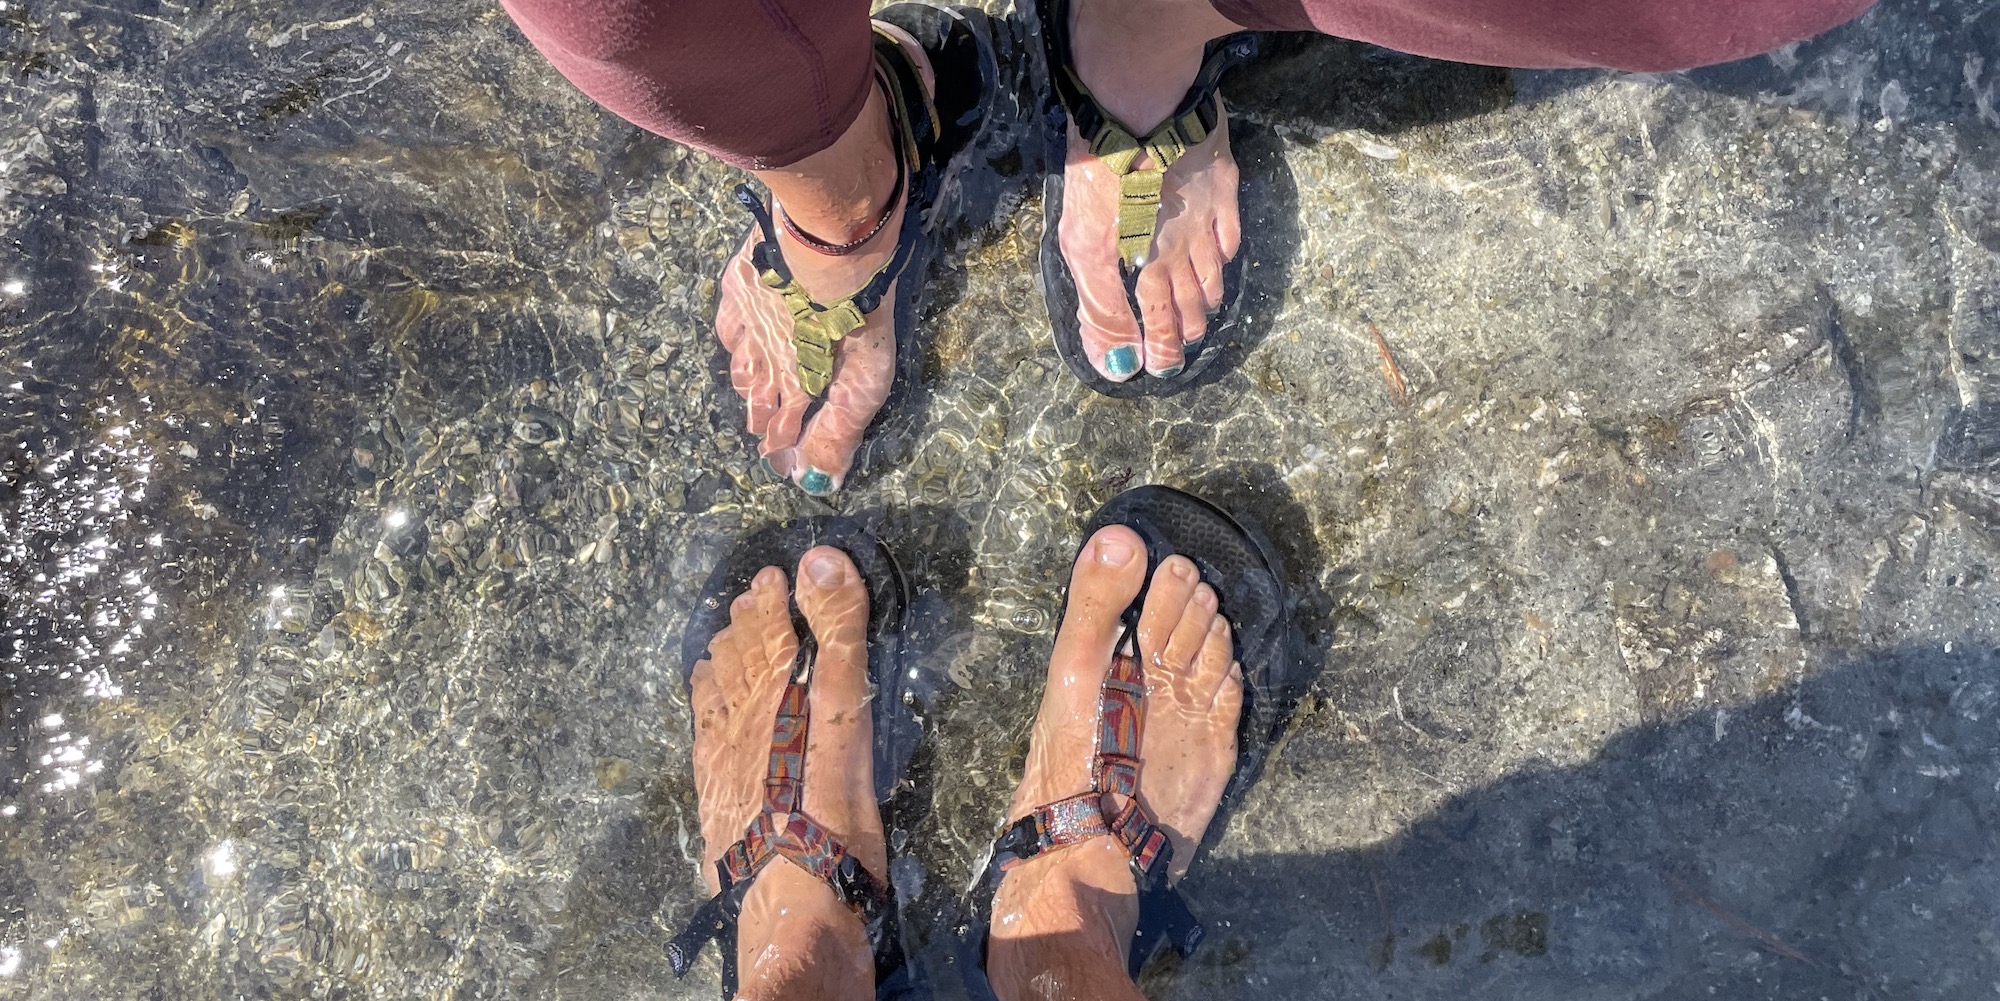 Drop down shot of peoples feet wearing Bedrock sandals in the river